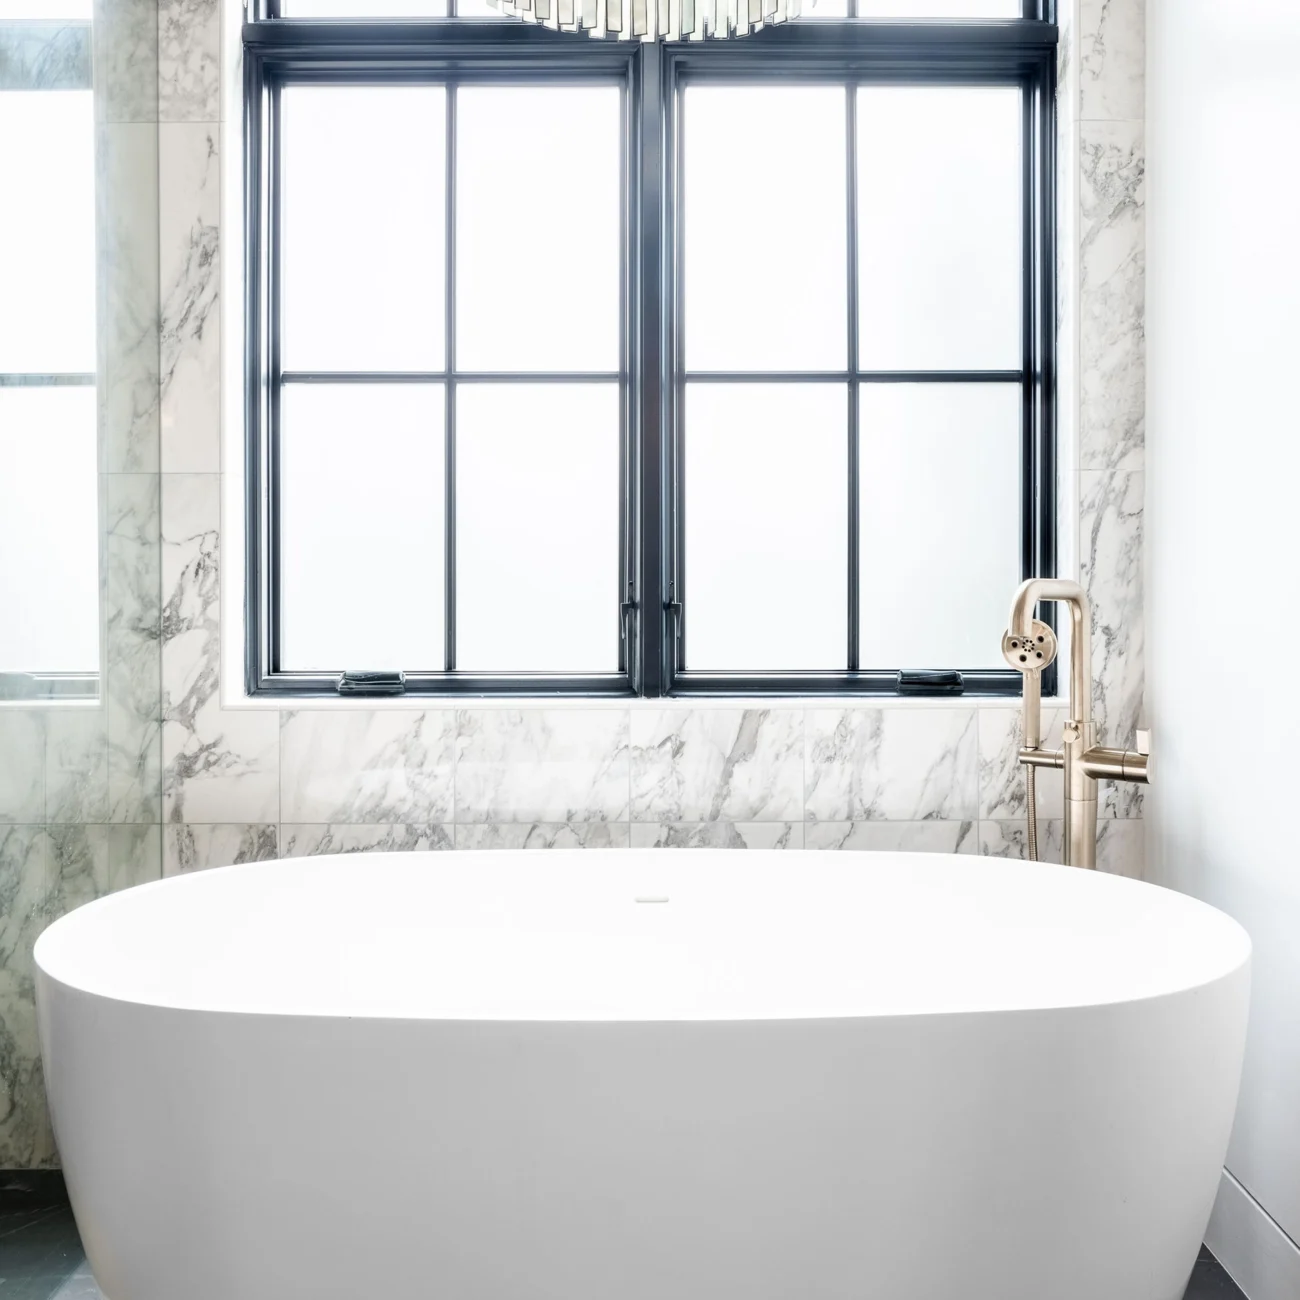 Christine Vroom Interiors | 36th | Costal bathroom with soaker tub